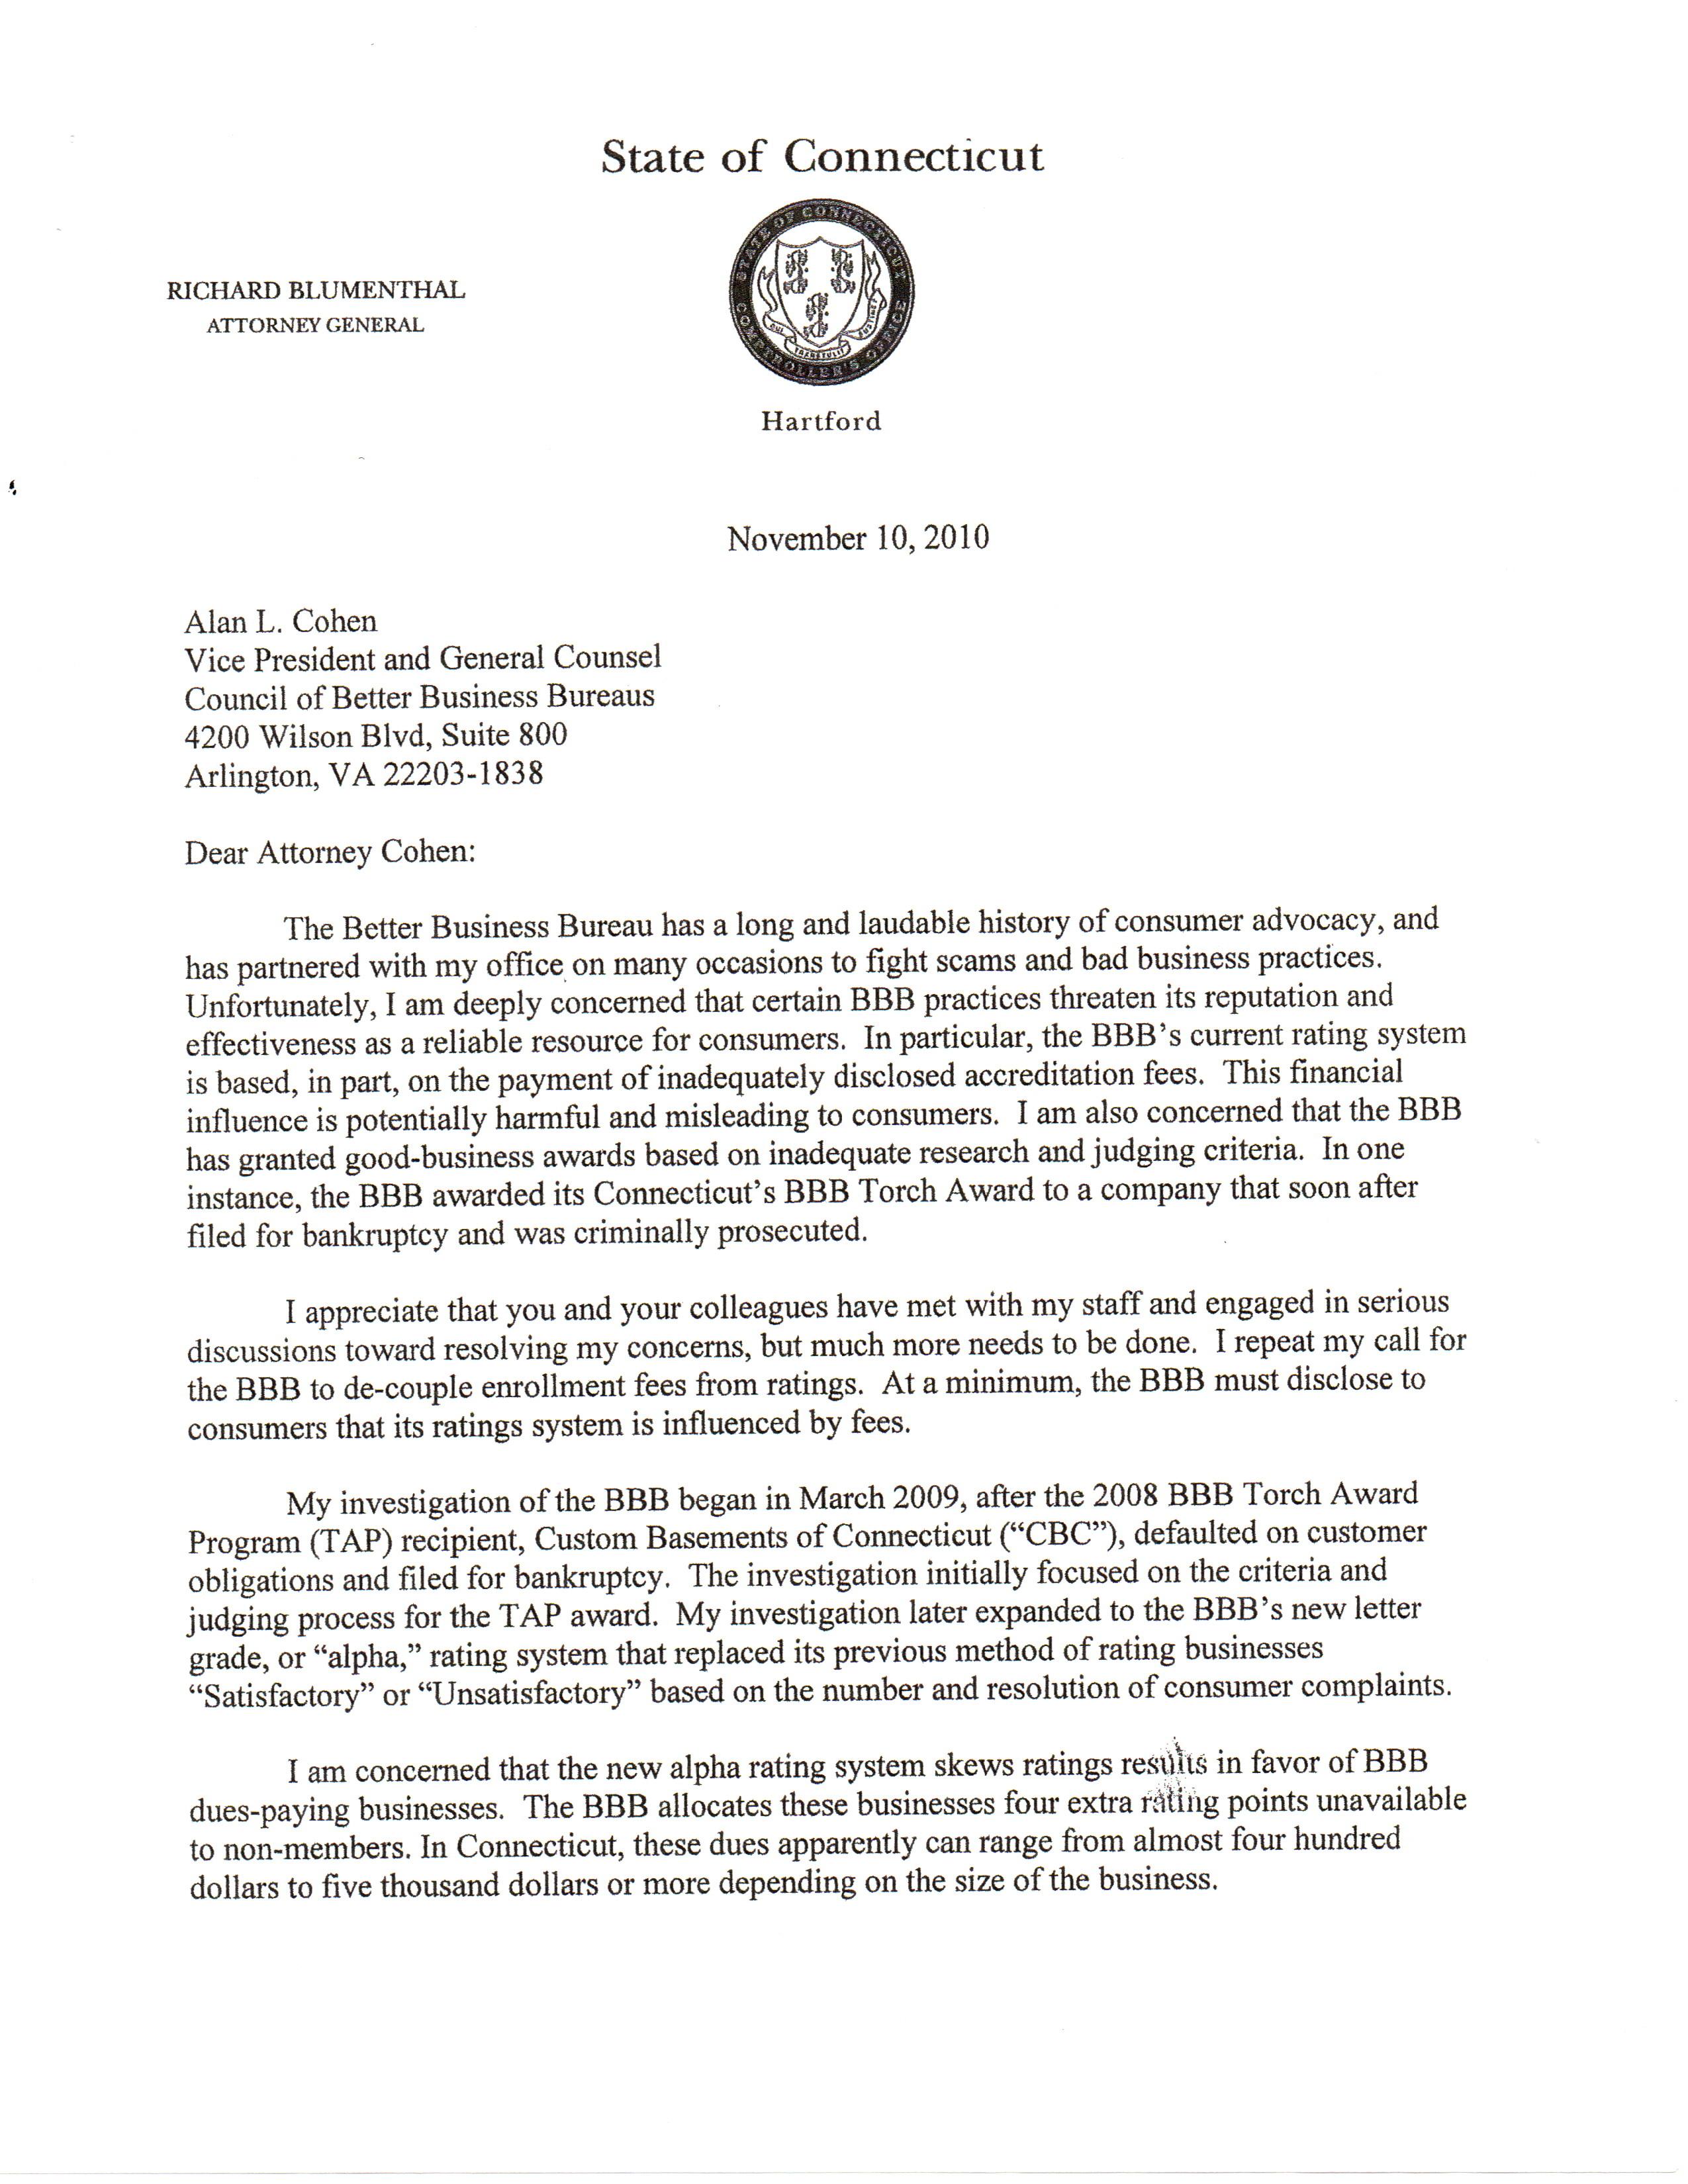 Former Atty Gen Richard Blumenthal's letter, Pg 1